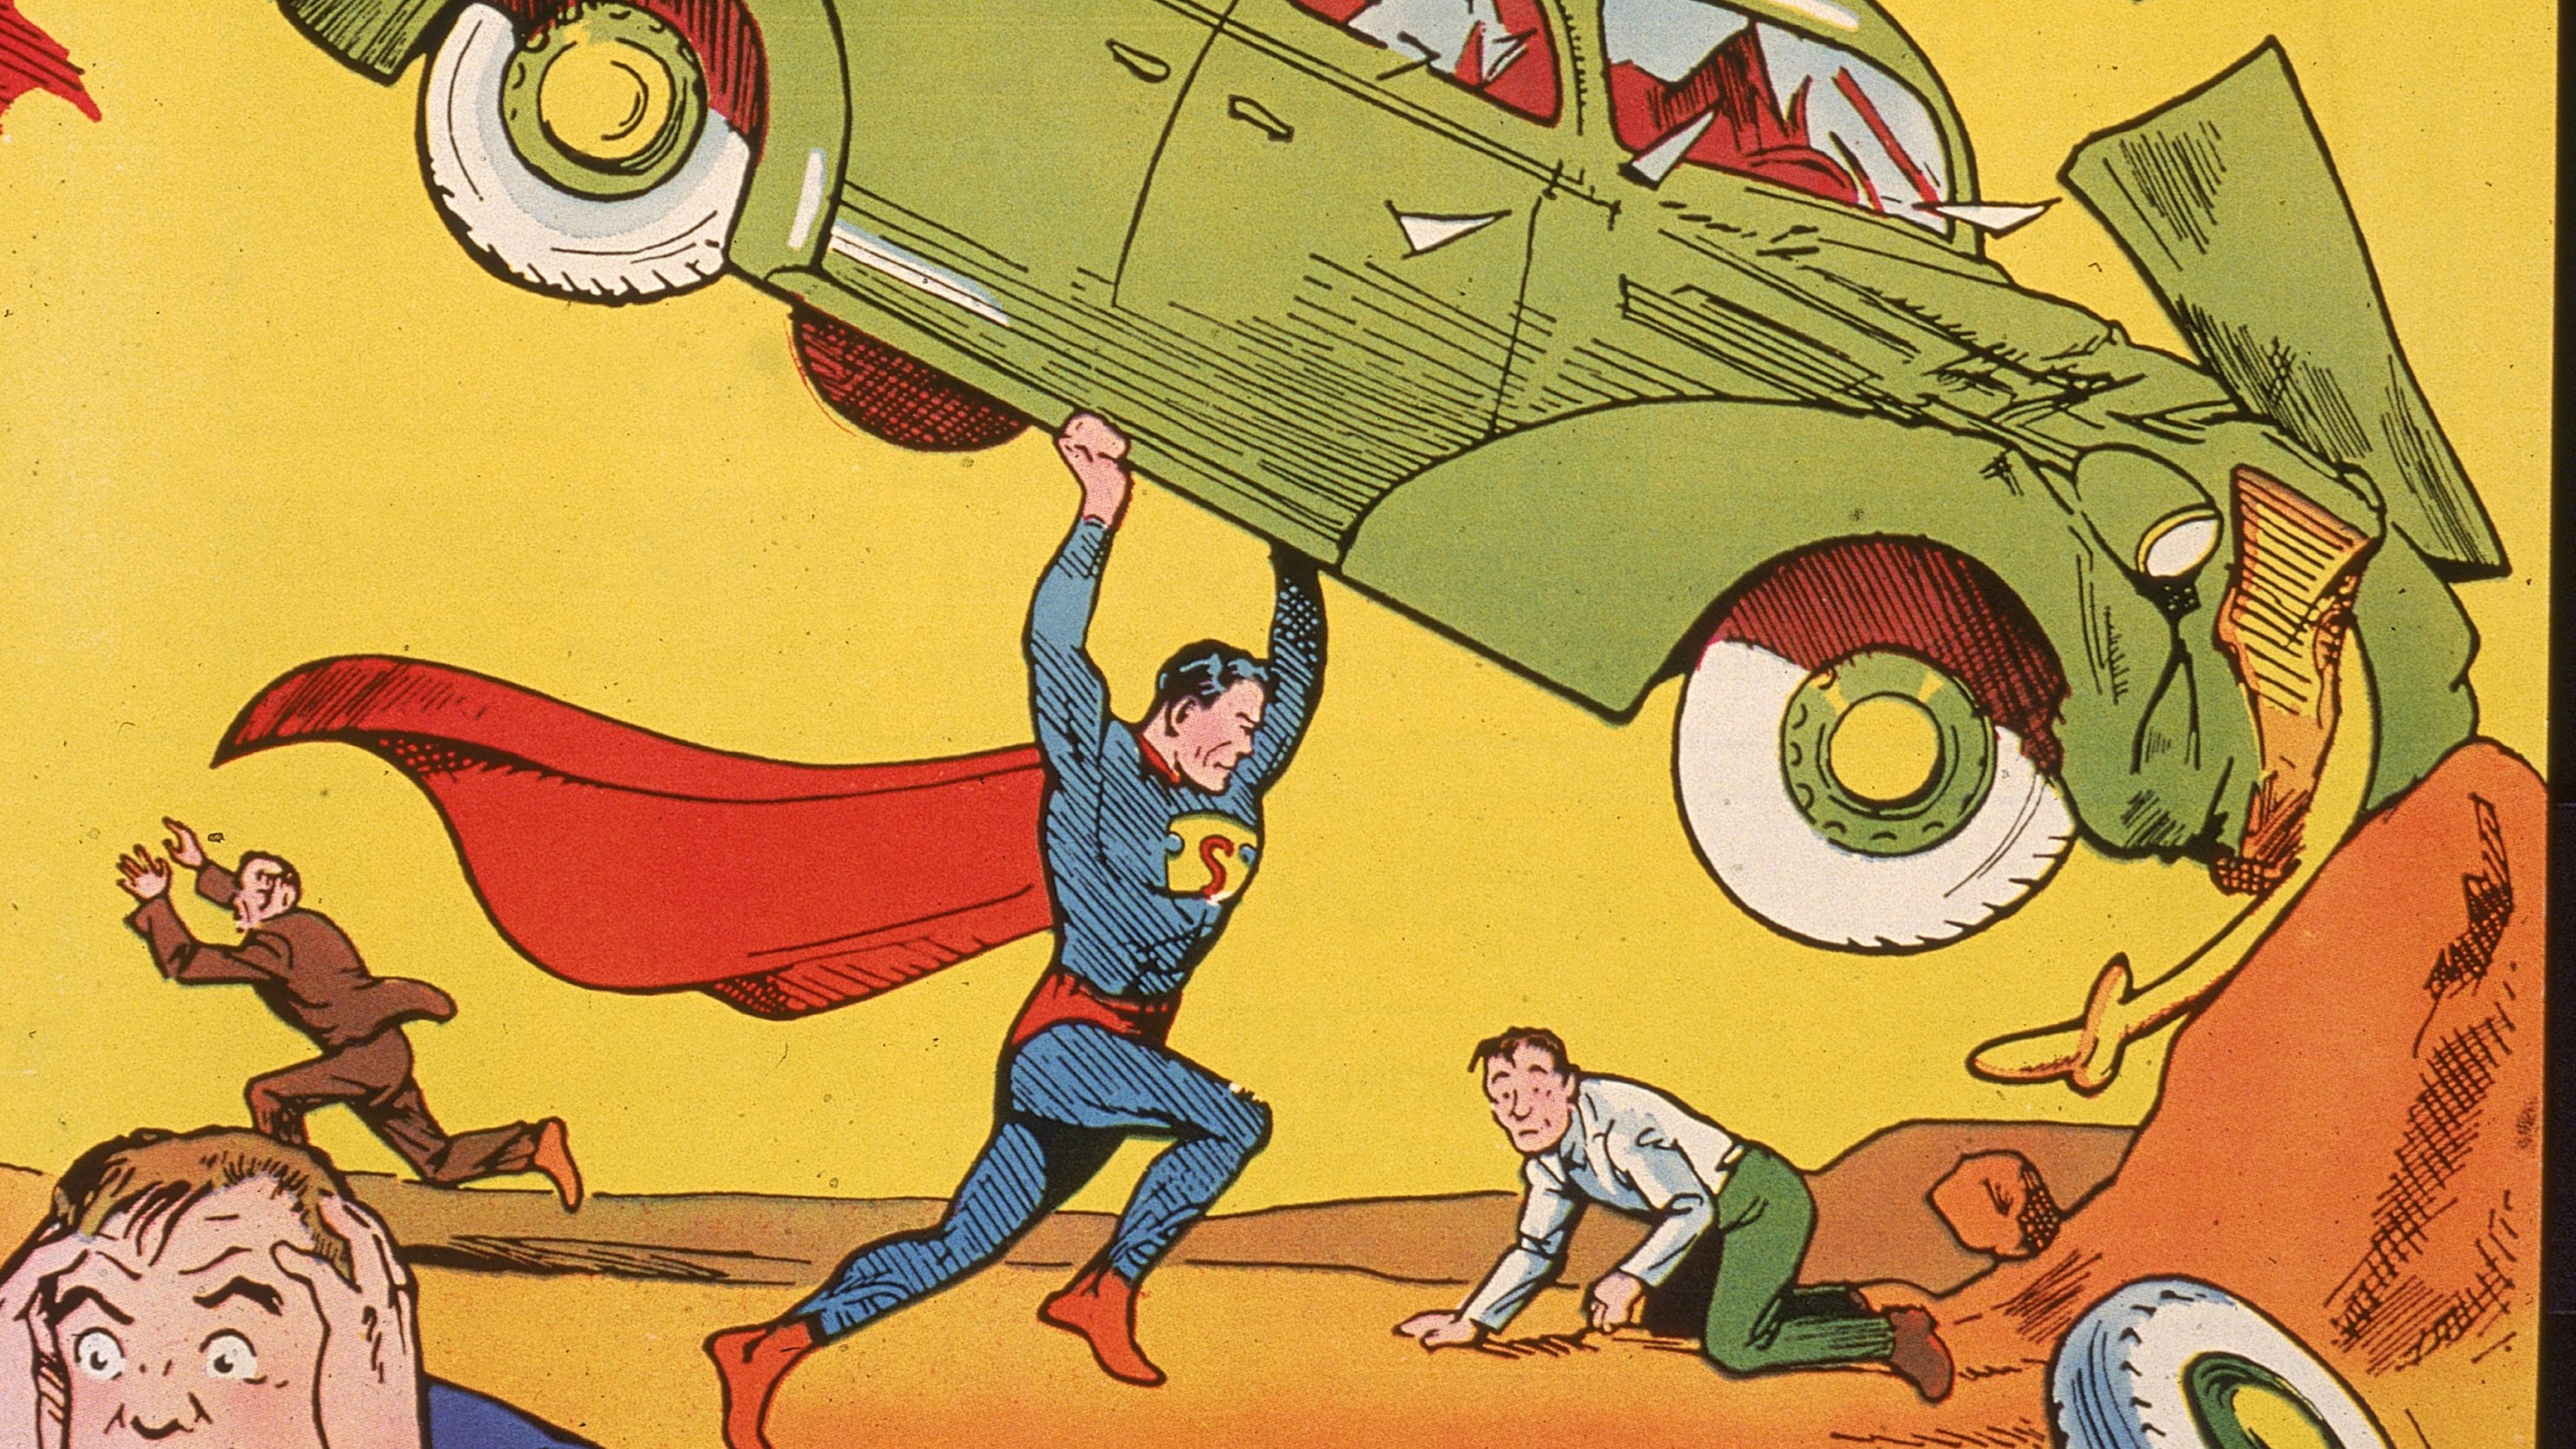 Action Comics No. 1 Introducing Superman